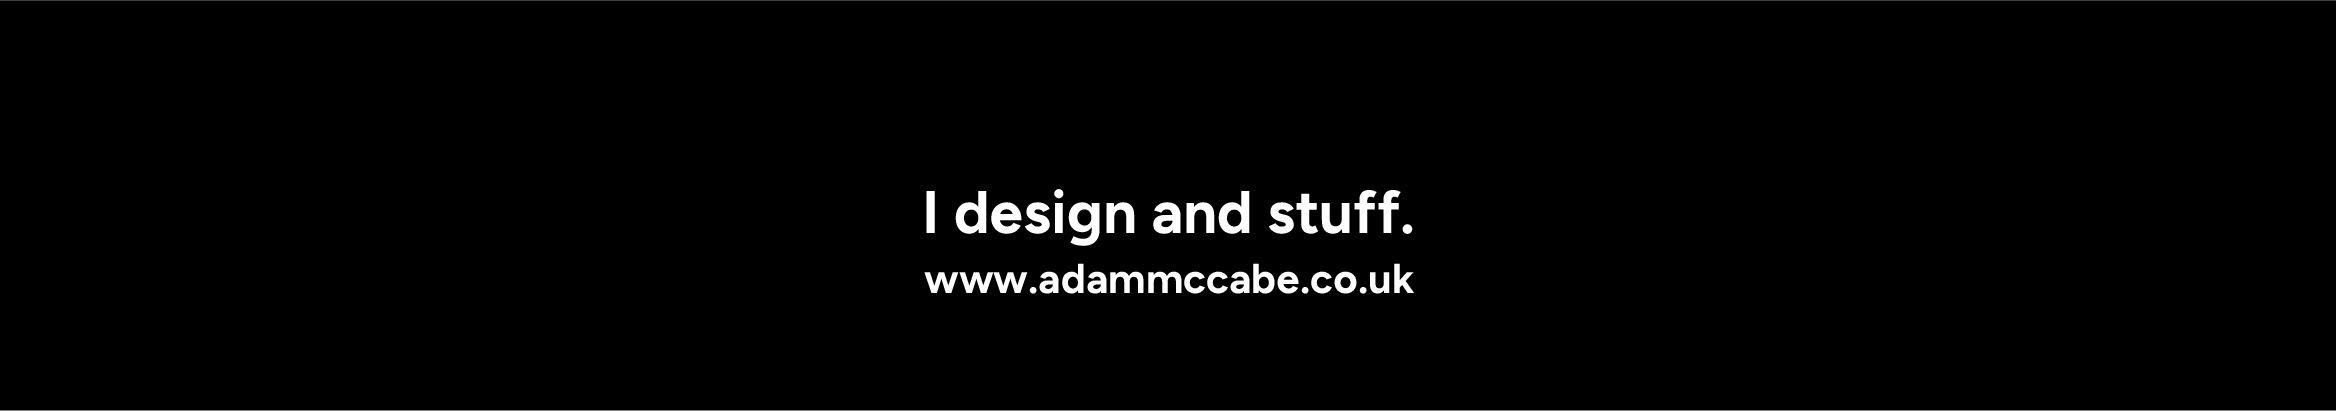 Adam McCabe's profile banner